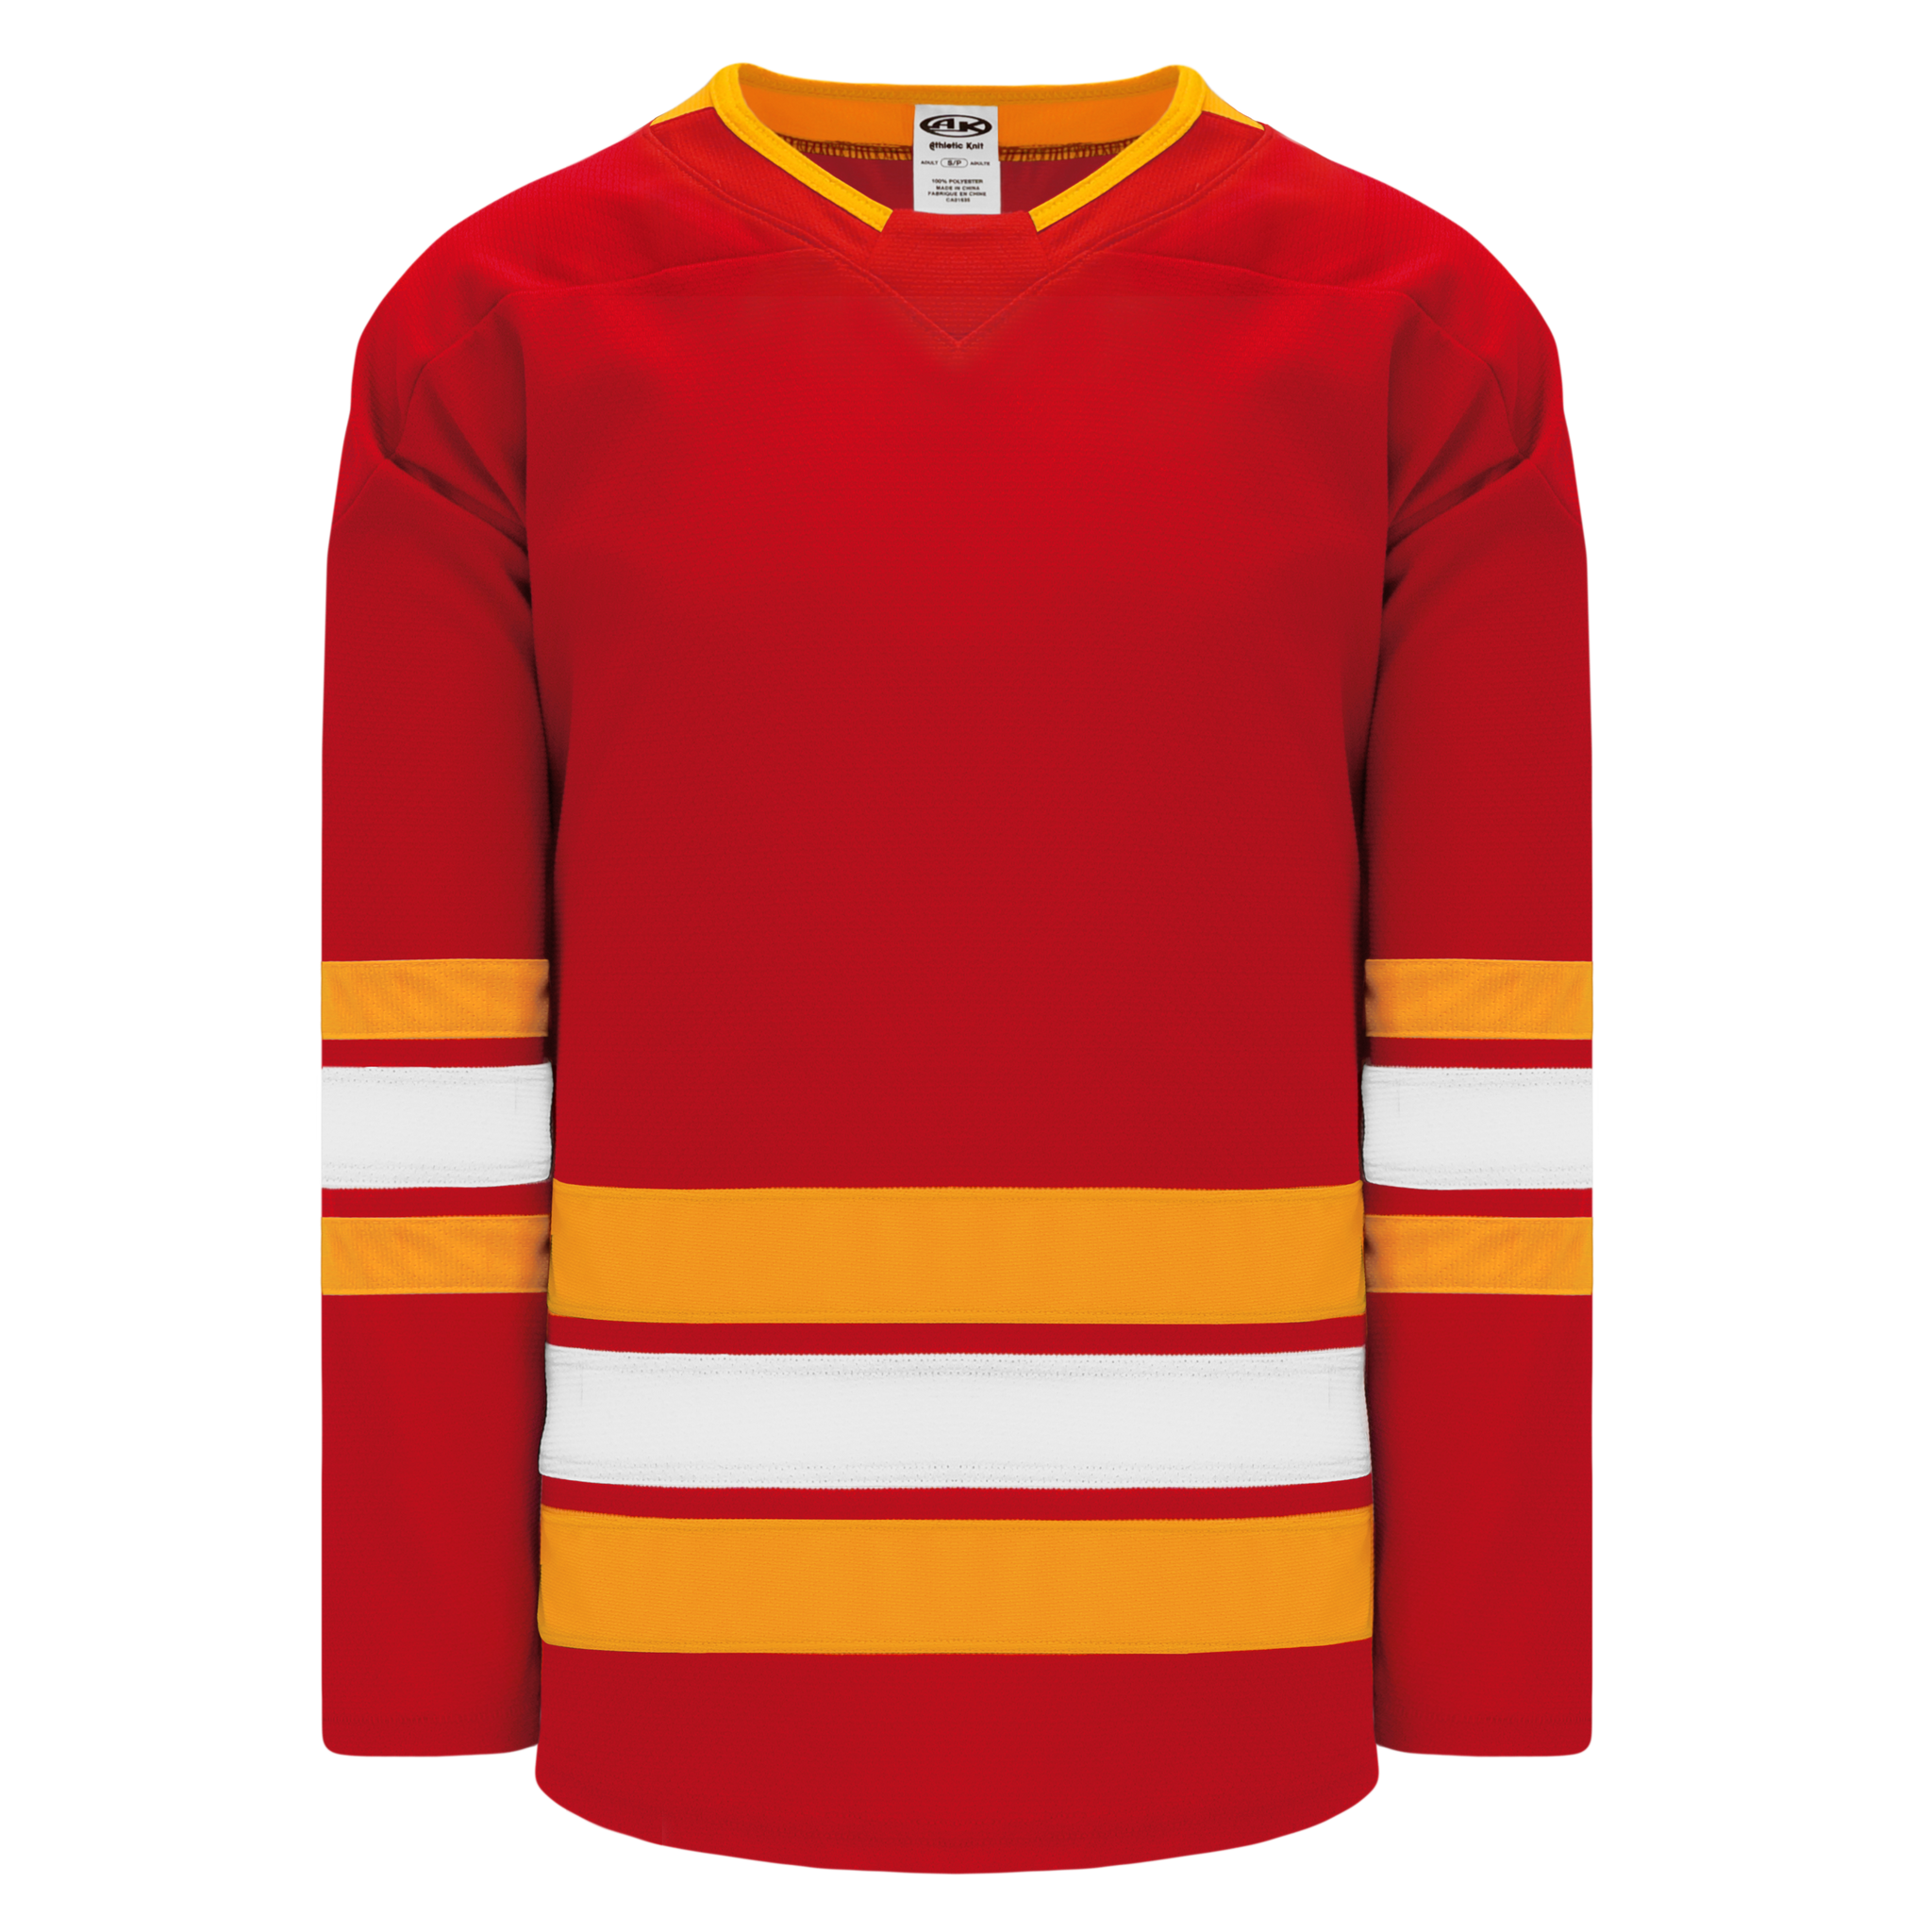 Calgary Flames Home Jersey Pin